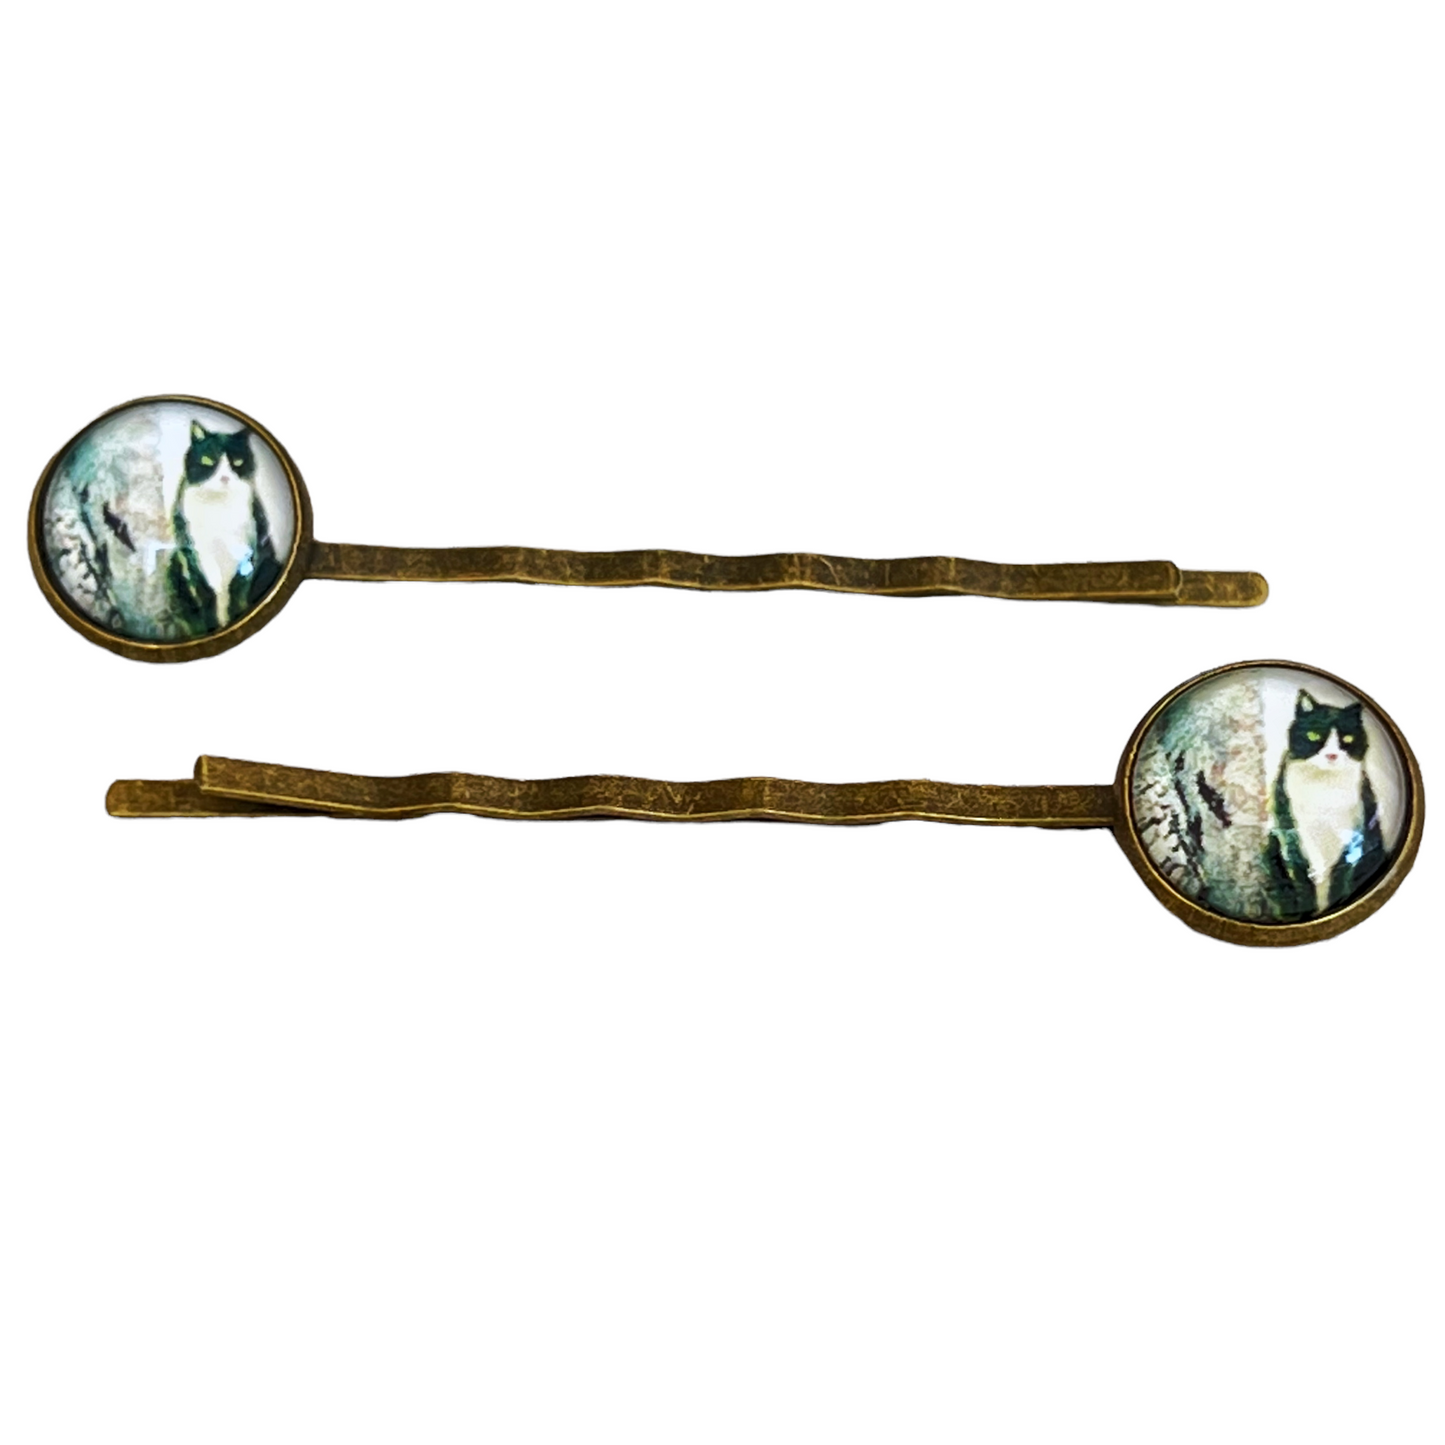 Black & White Cat Brass Hair Pins - Feline-Inspired Accessories